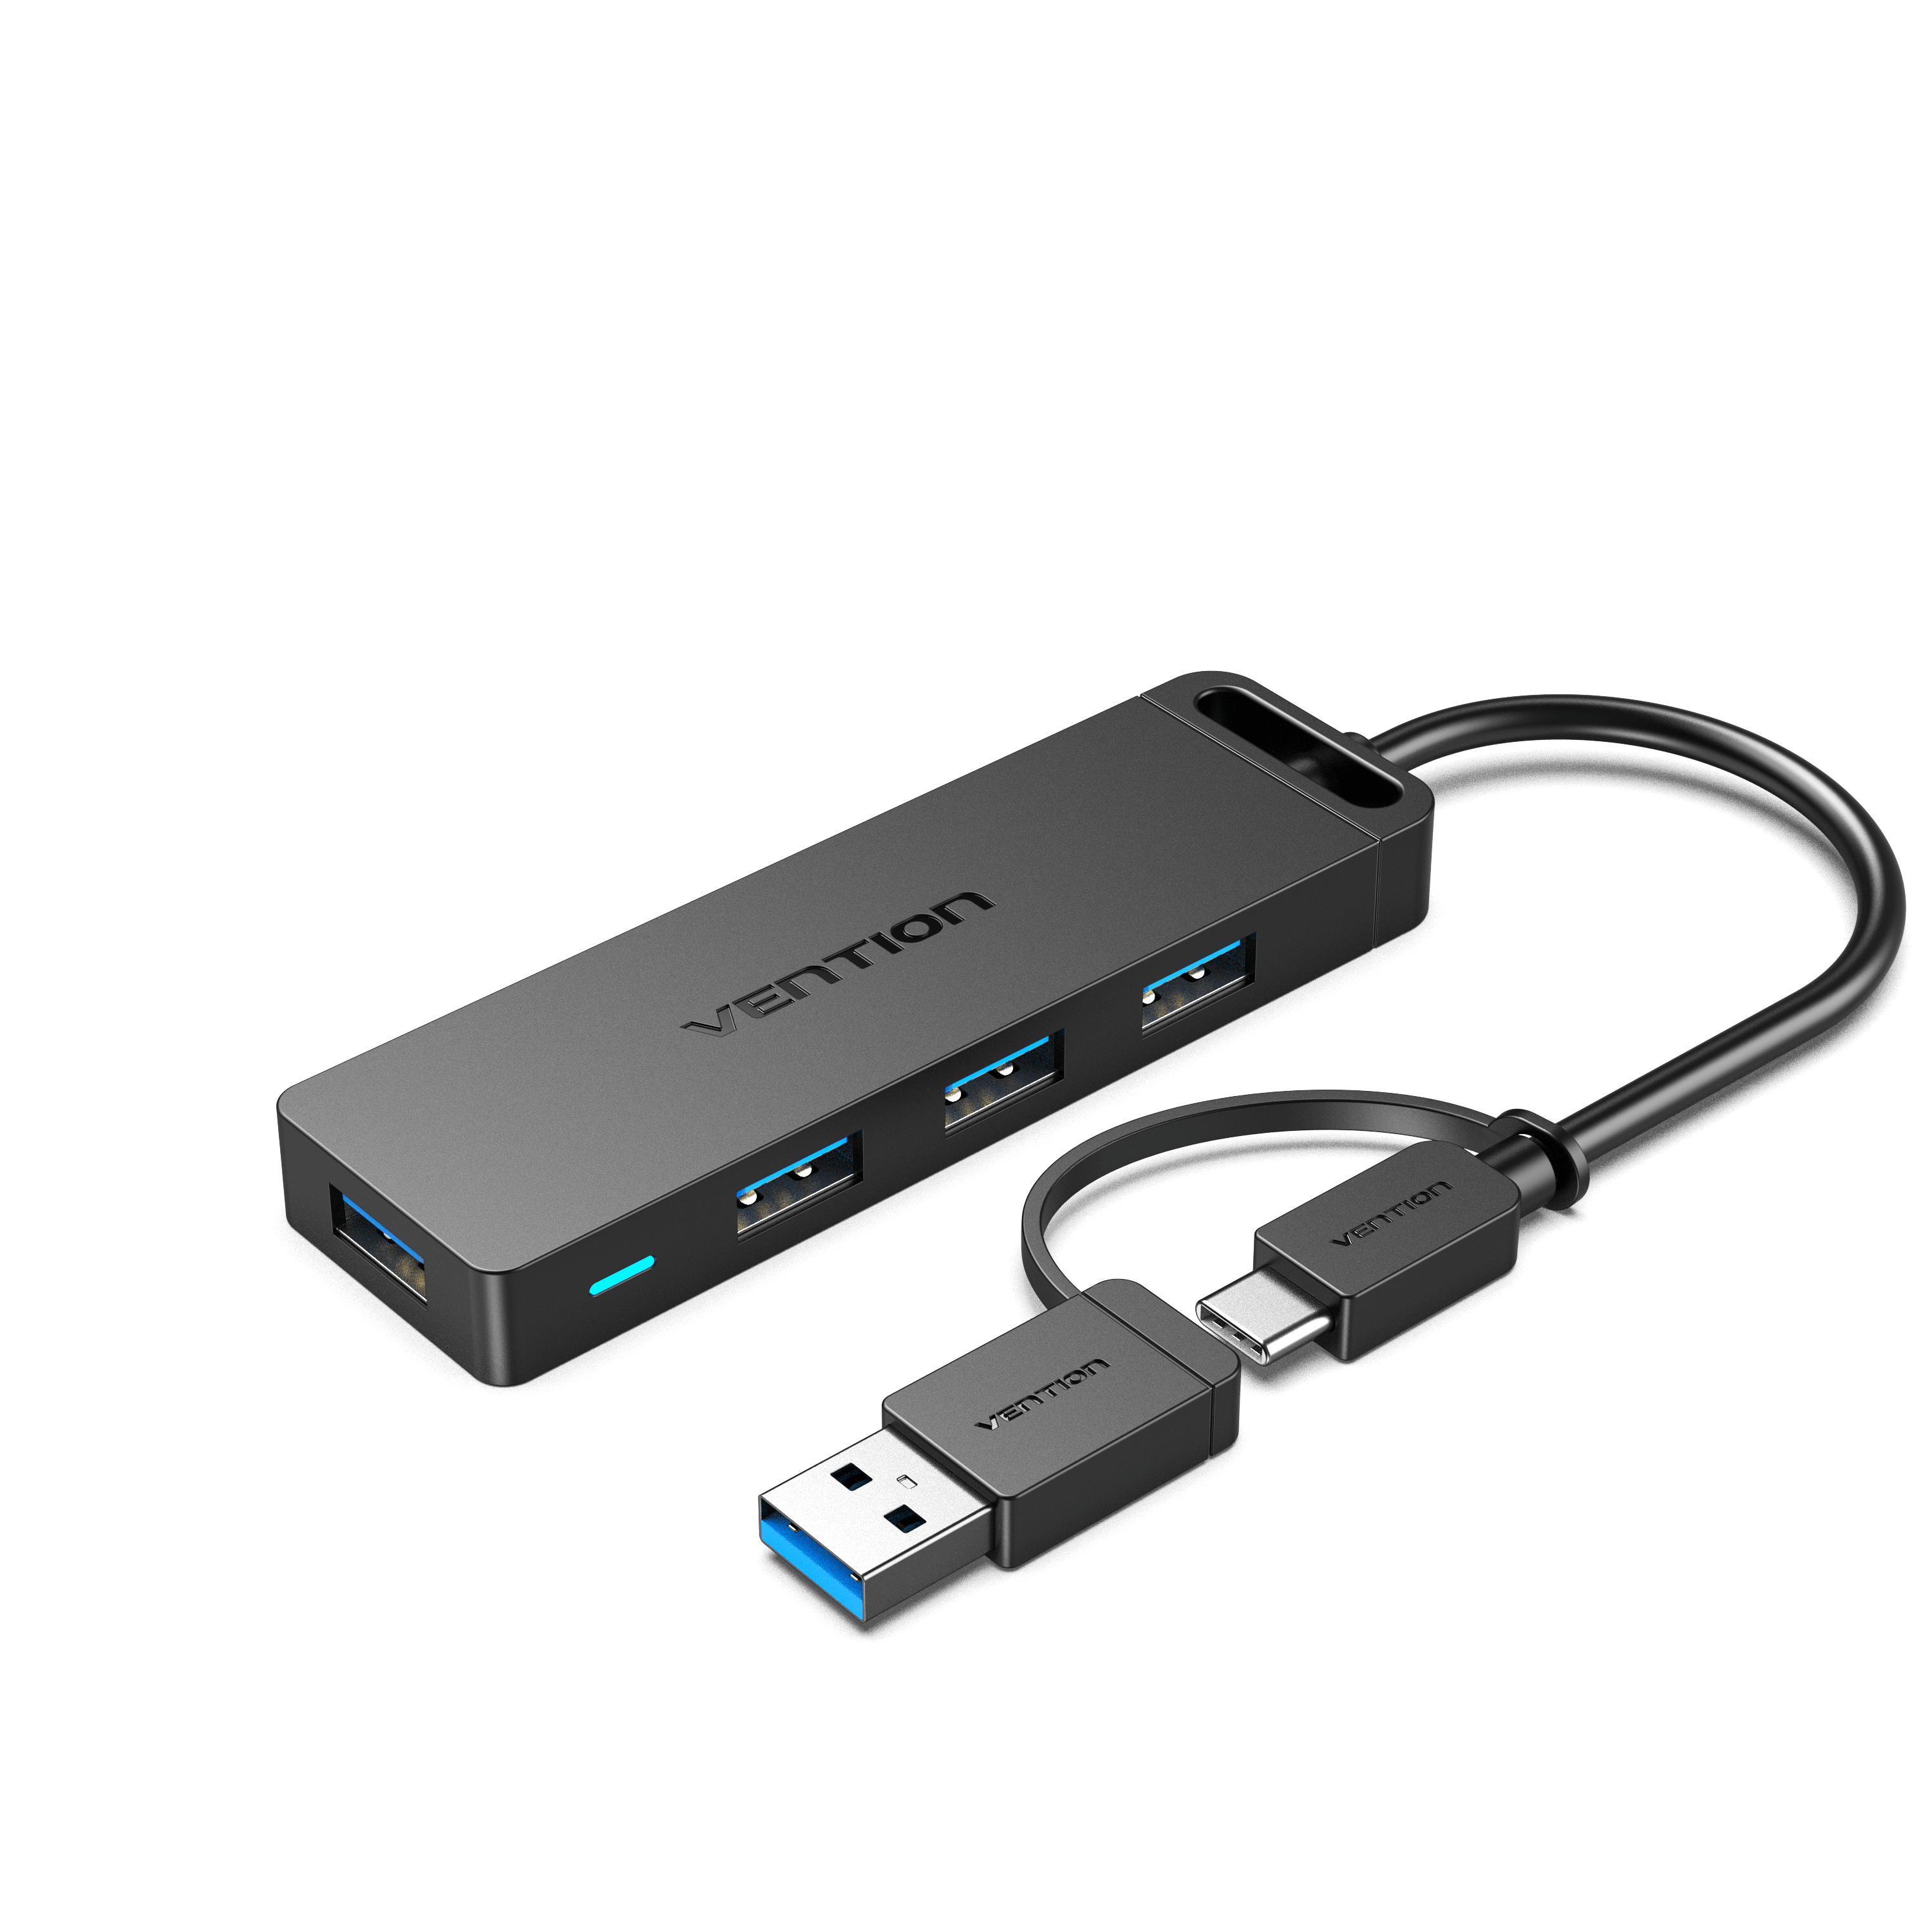 USB 3.0 4-Port Hub (Black)